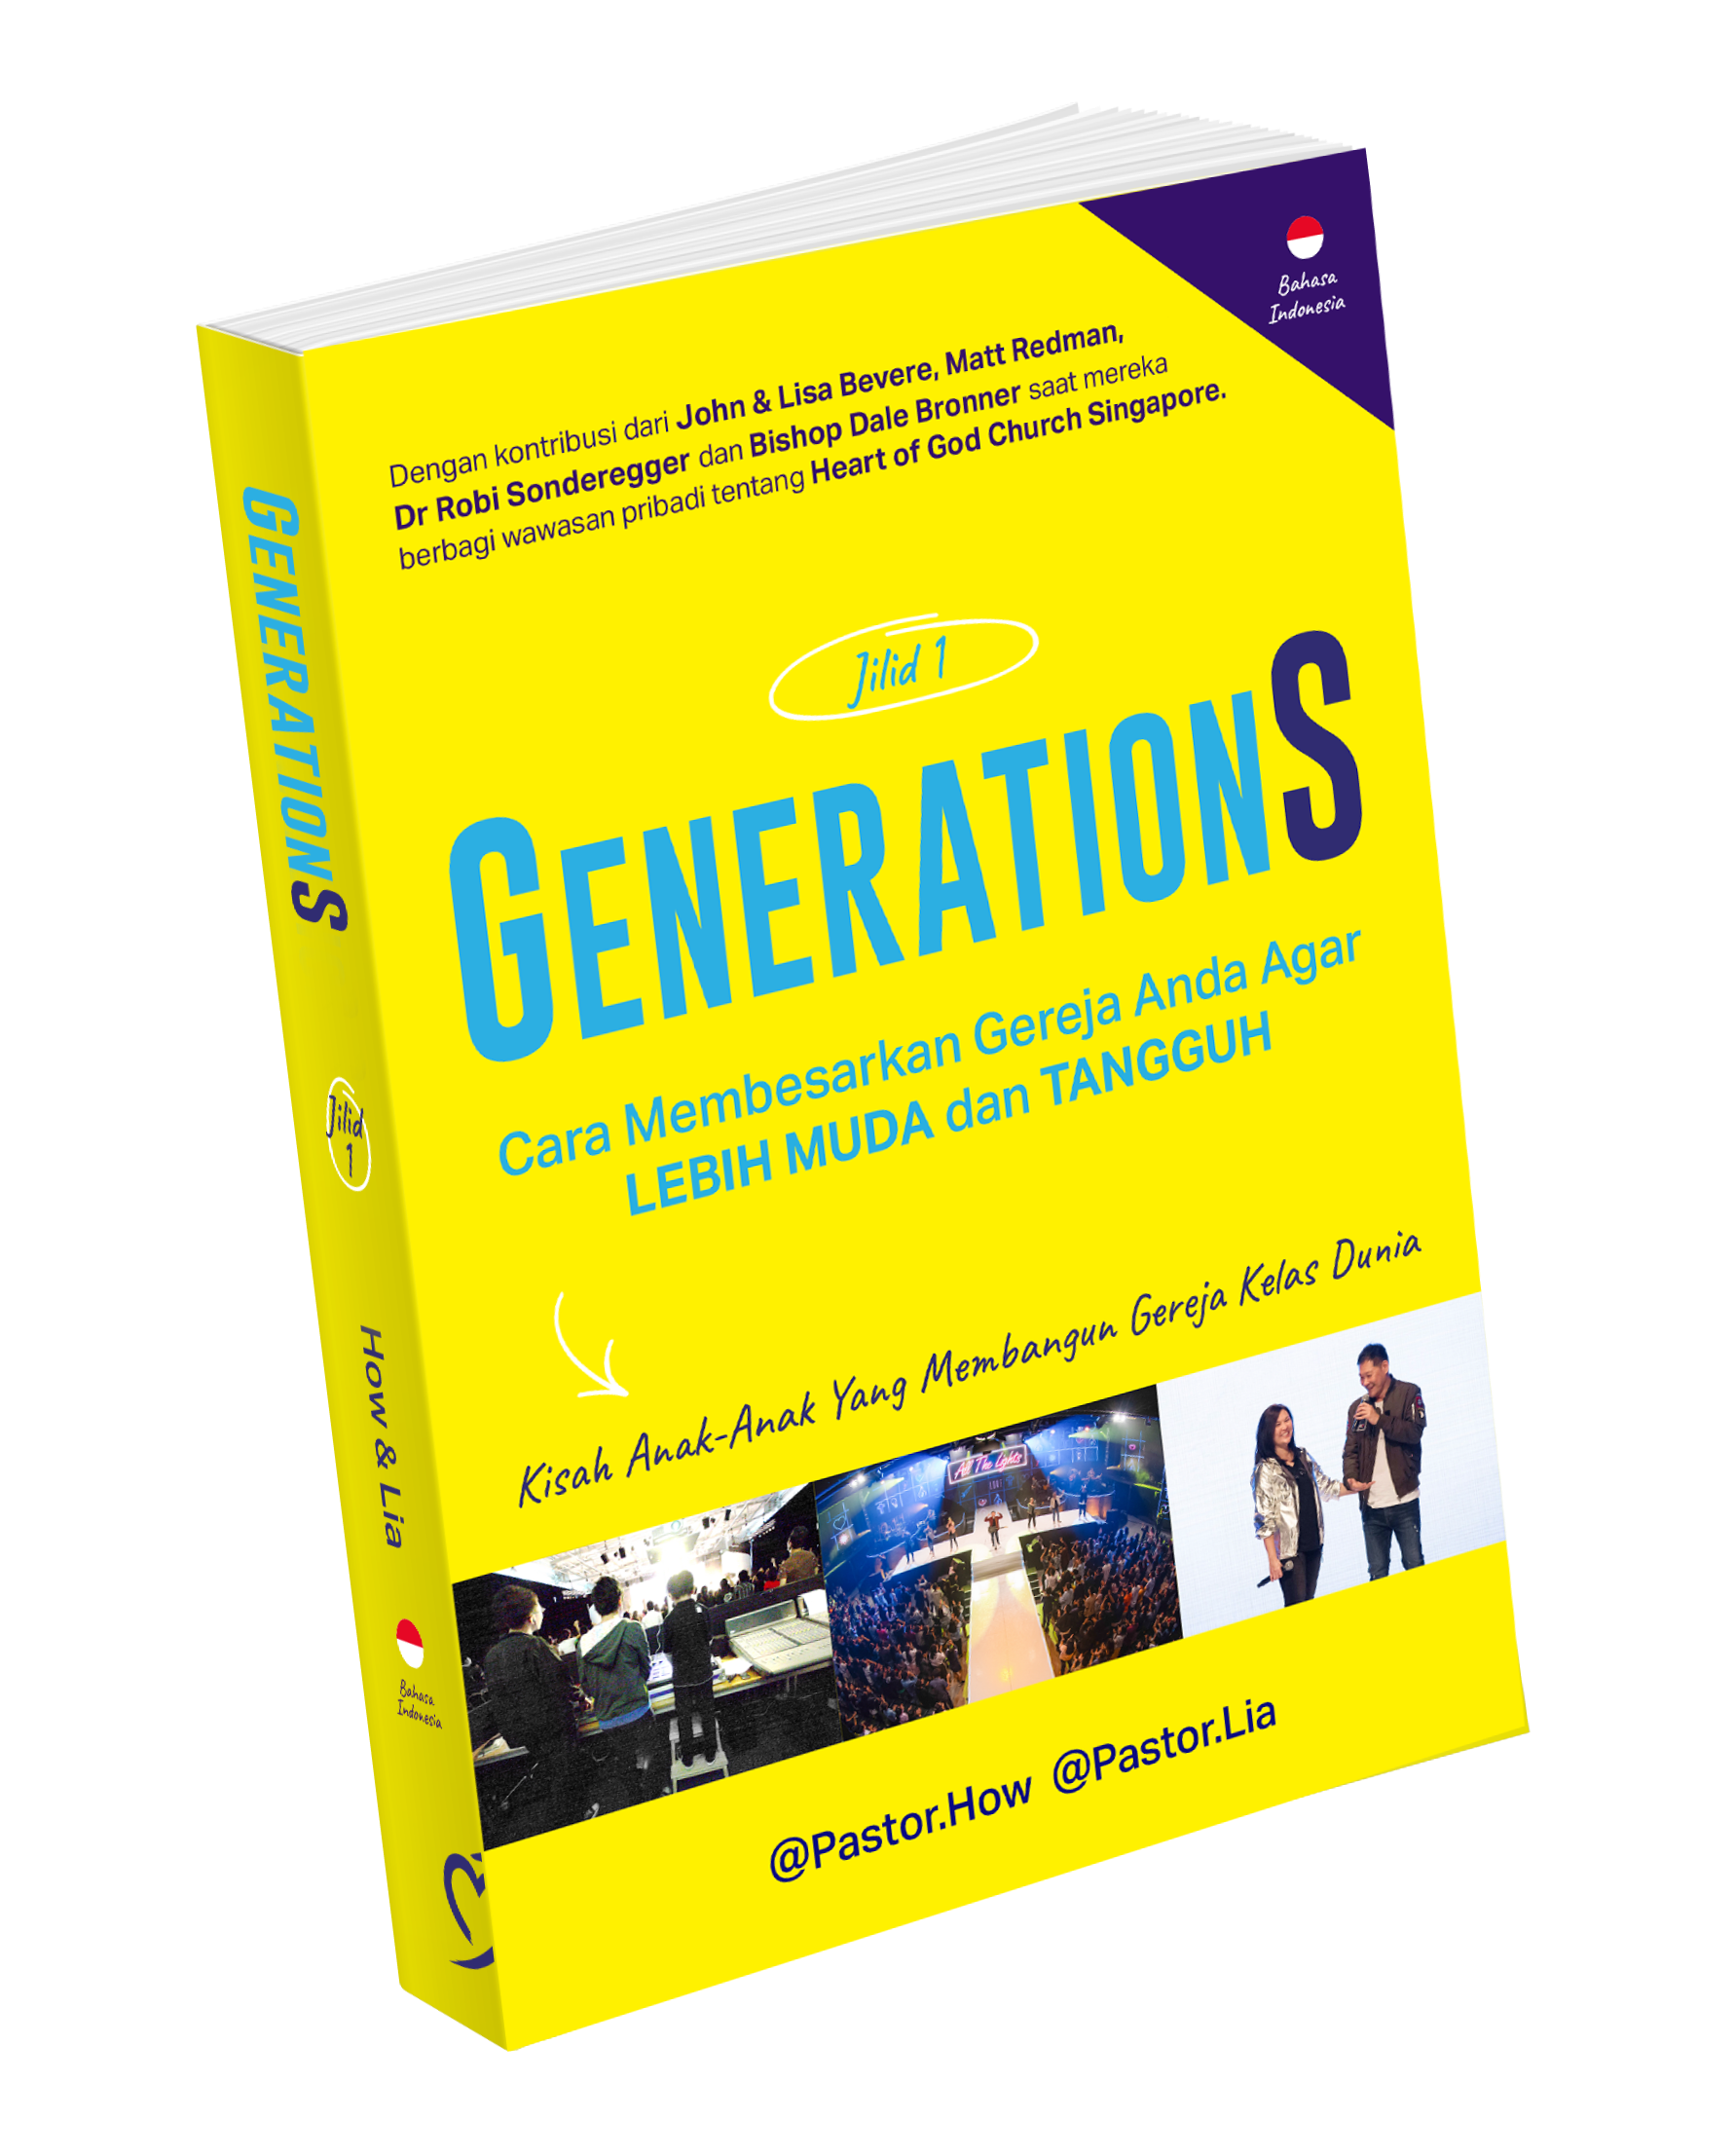 Heart of God Church GenerationS Buku